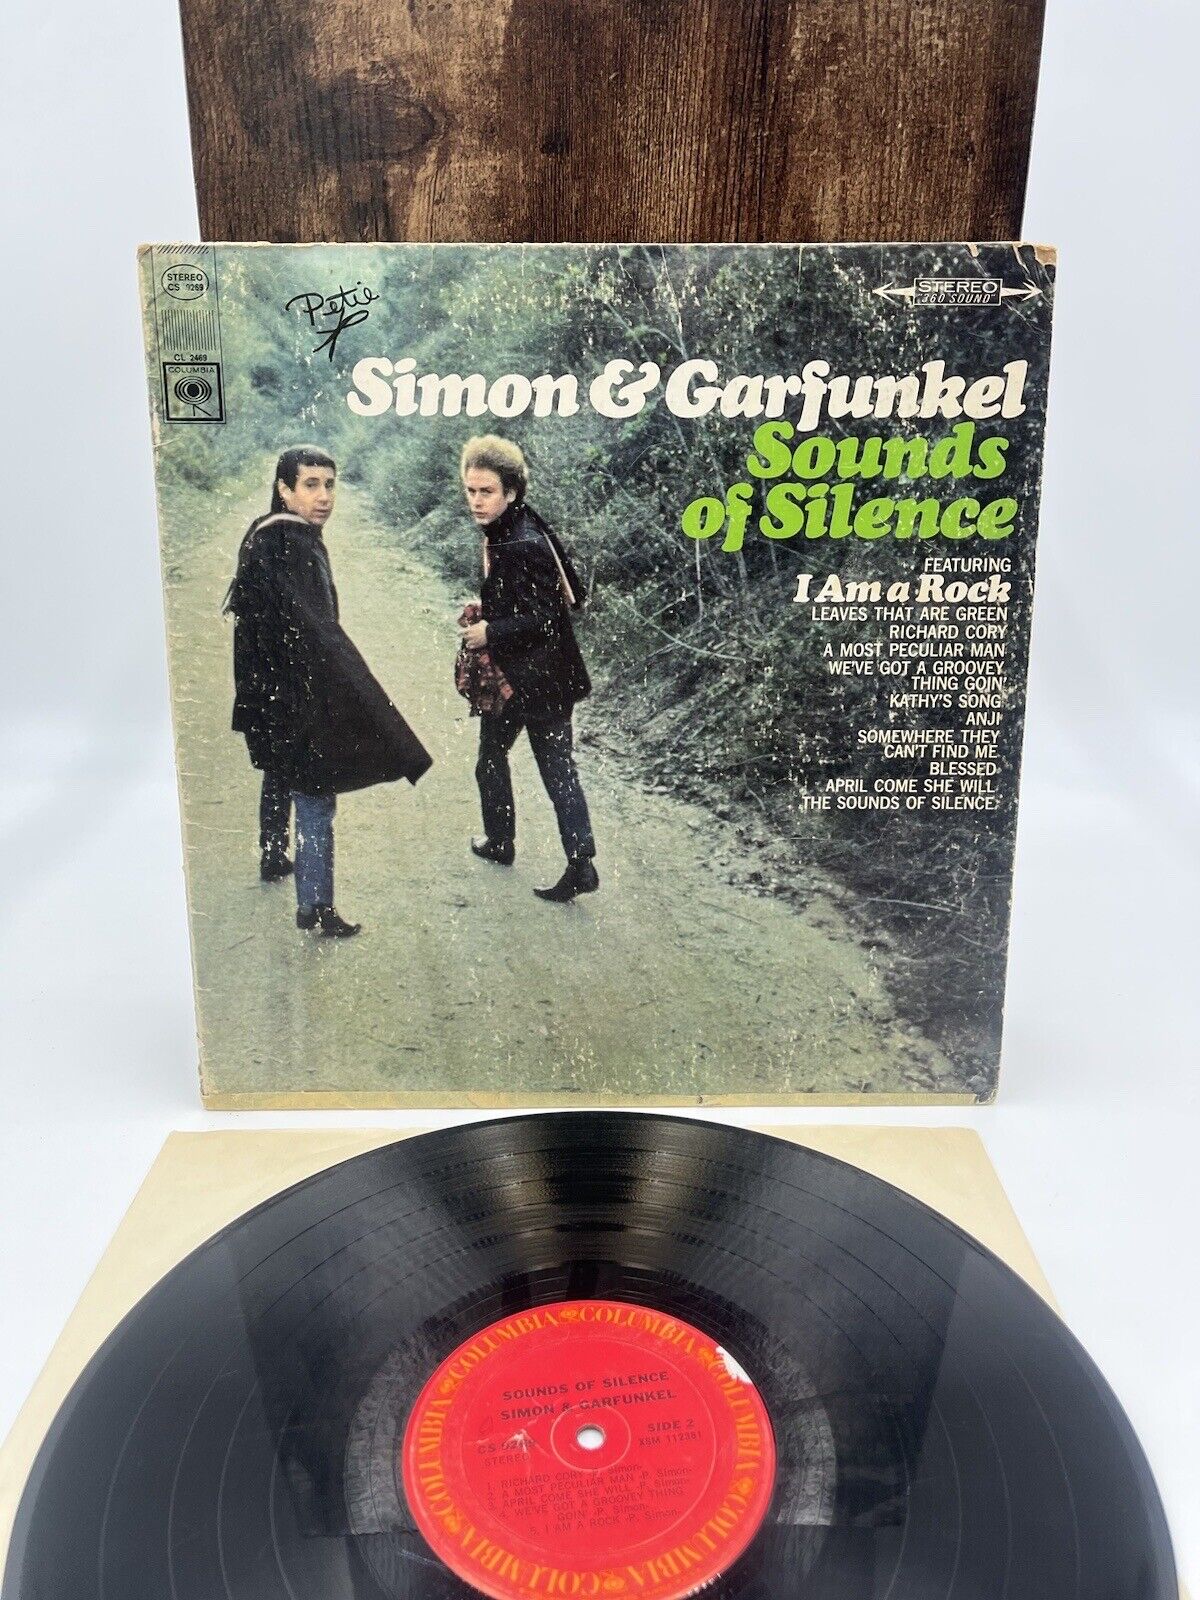 Simon and Garfunkel - Sounds of Silence - COLUMBIA # CS-9269